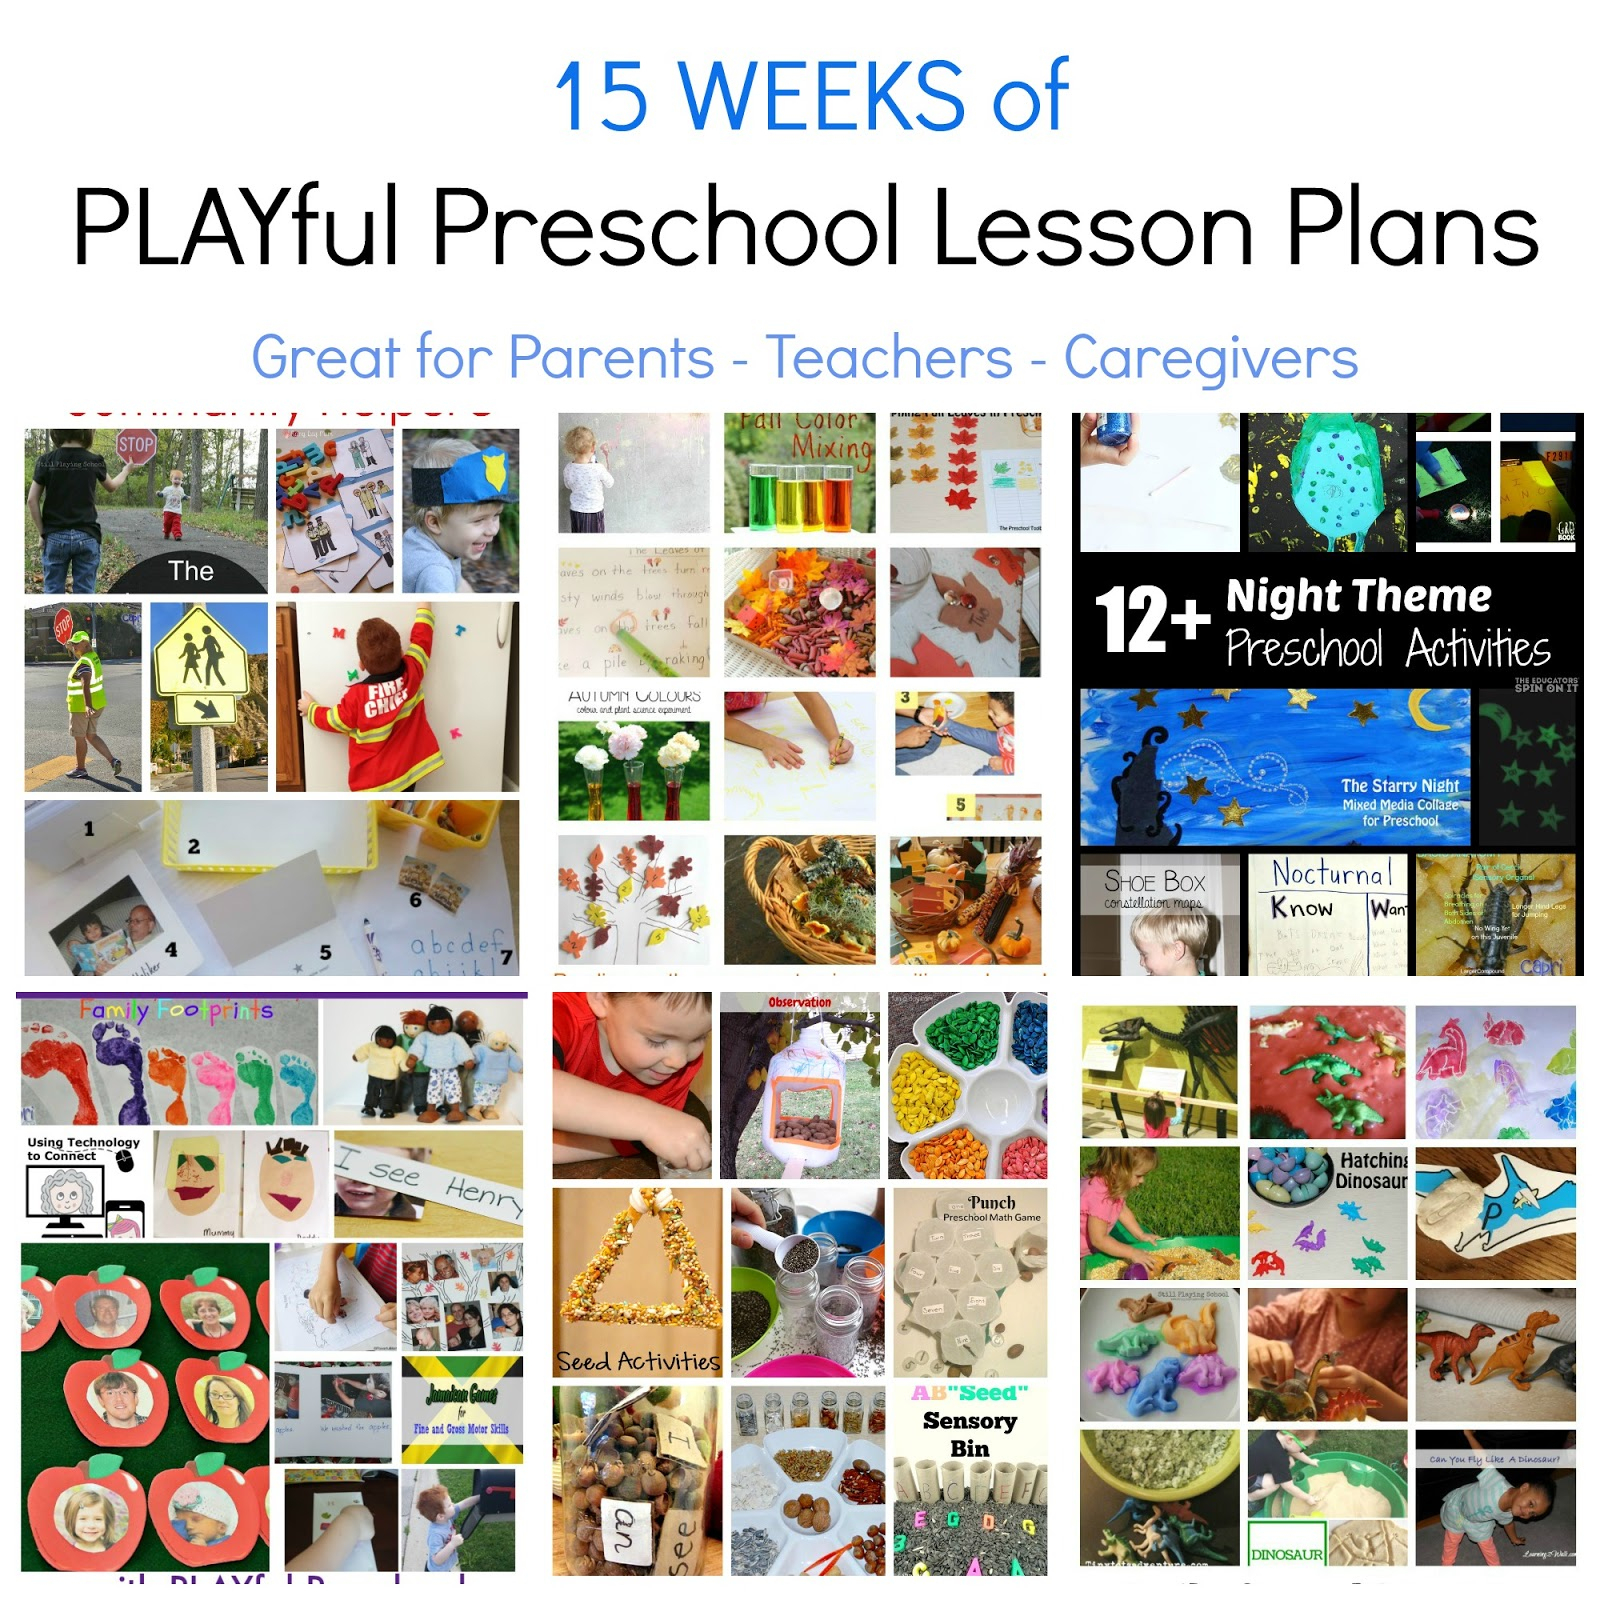 Free Preschool Thematic Lesson Plans #playfulpreschool - The